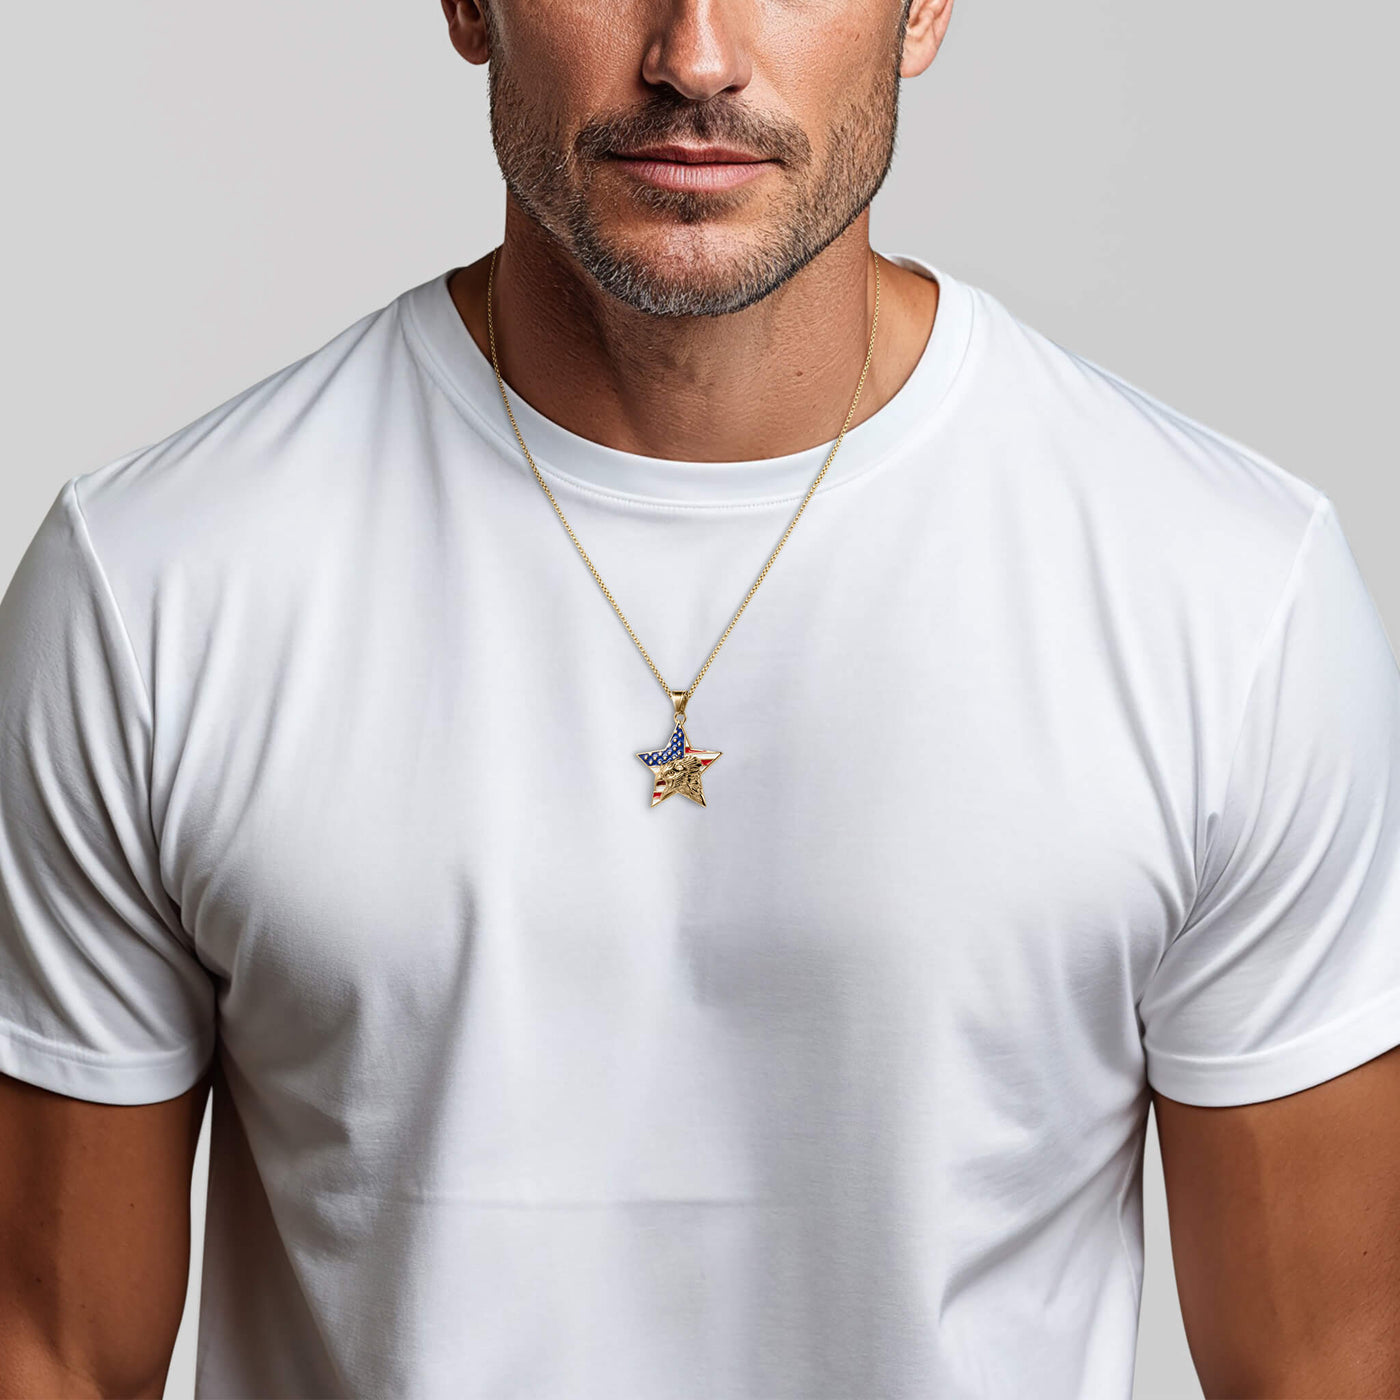 Man in white t-shirt wearing gold star pendant